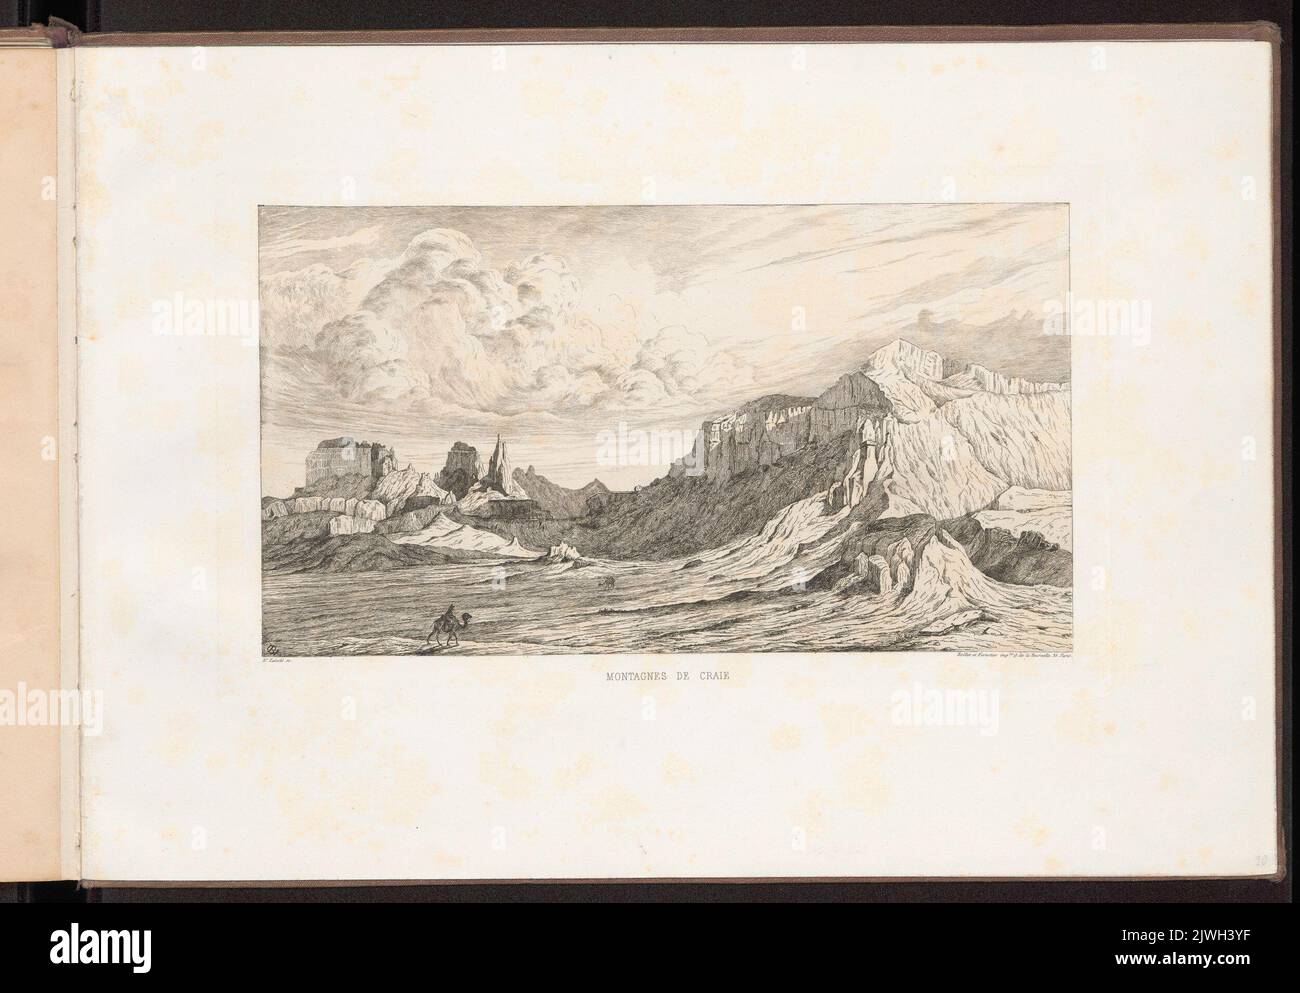 Montagnes de Craie. Zaleski, Bronisław (1820-1880), graphic artist, Beillet (Paryż ; wydawnictwo ; ca 1850-ca 1875), publishing house Stock Photo